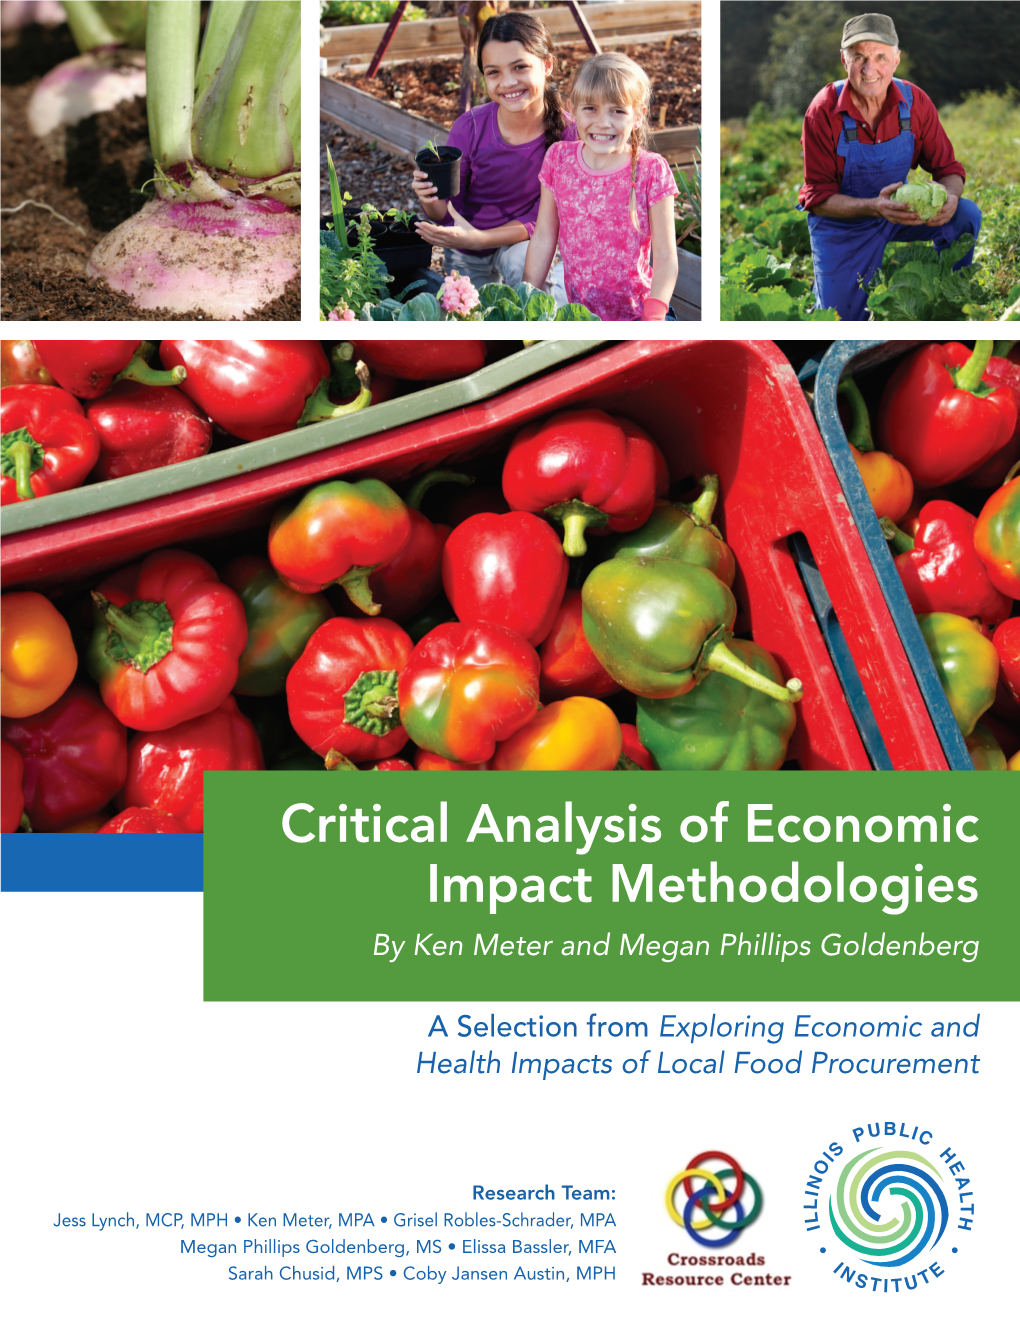 Critical Analysis of Economic Impact Methodologies by Ken Meter and Megan Phillips Goldenberg